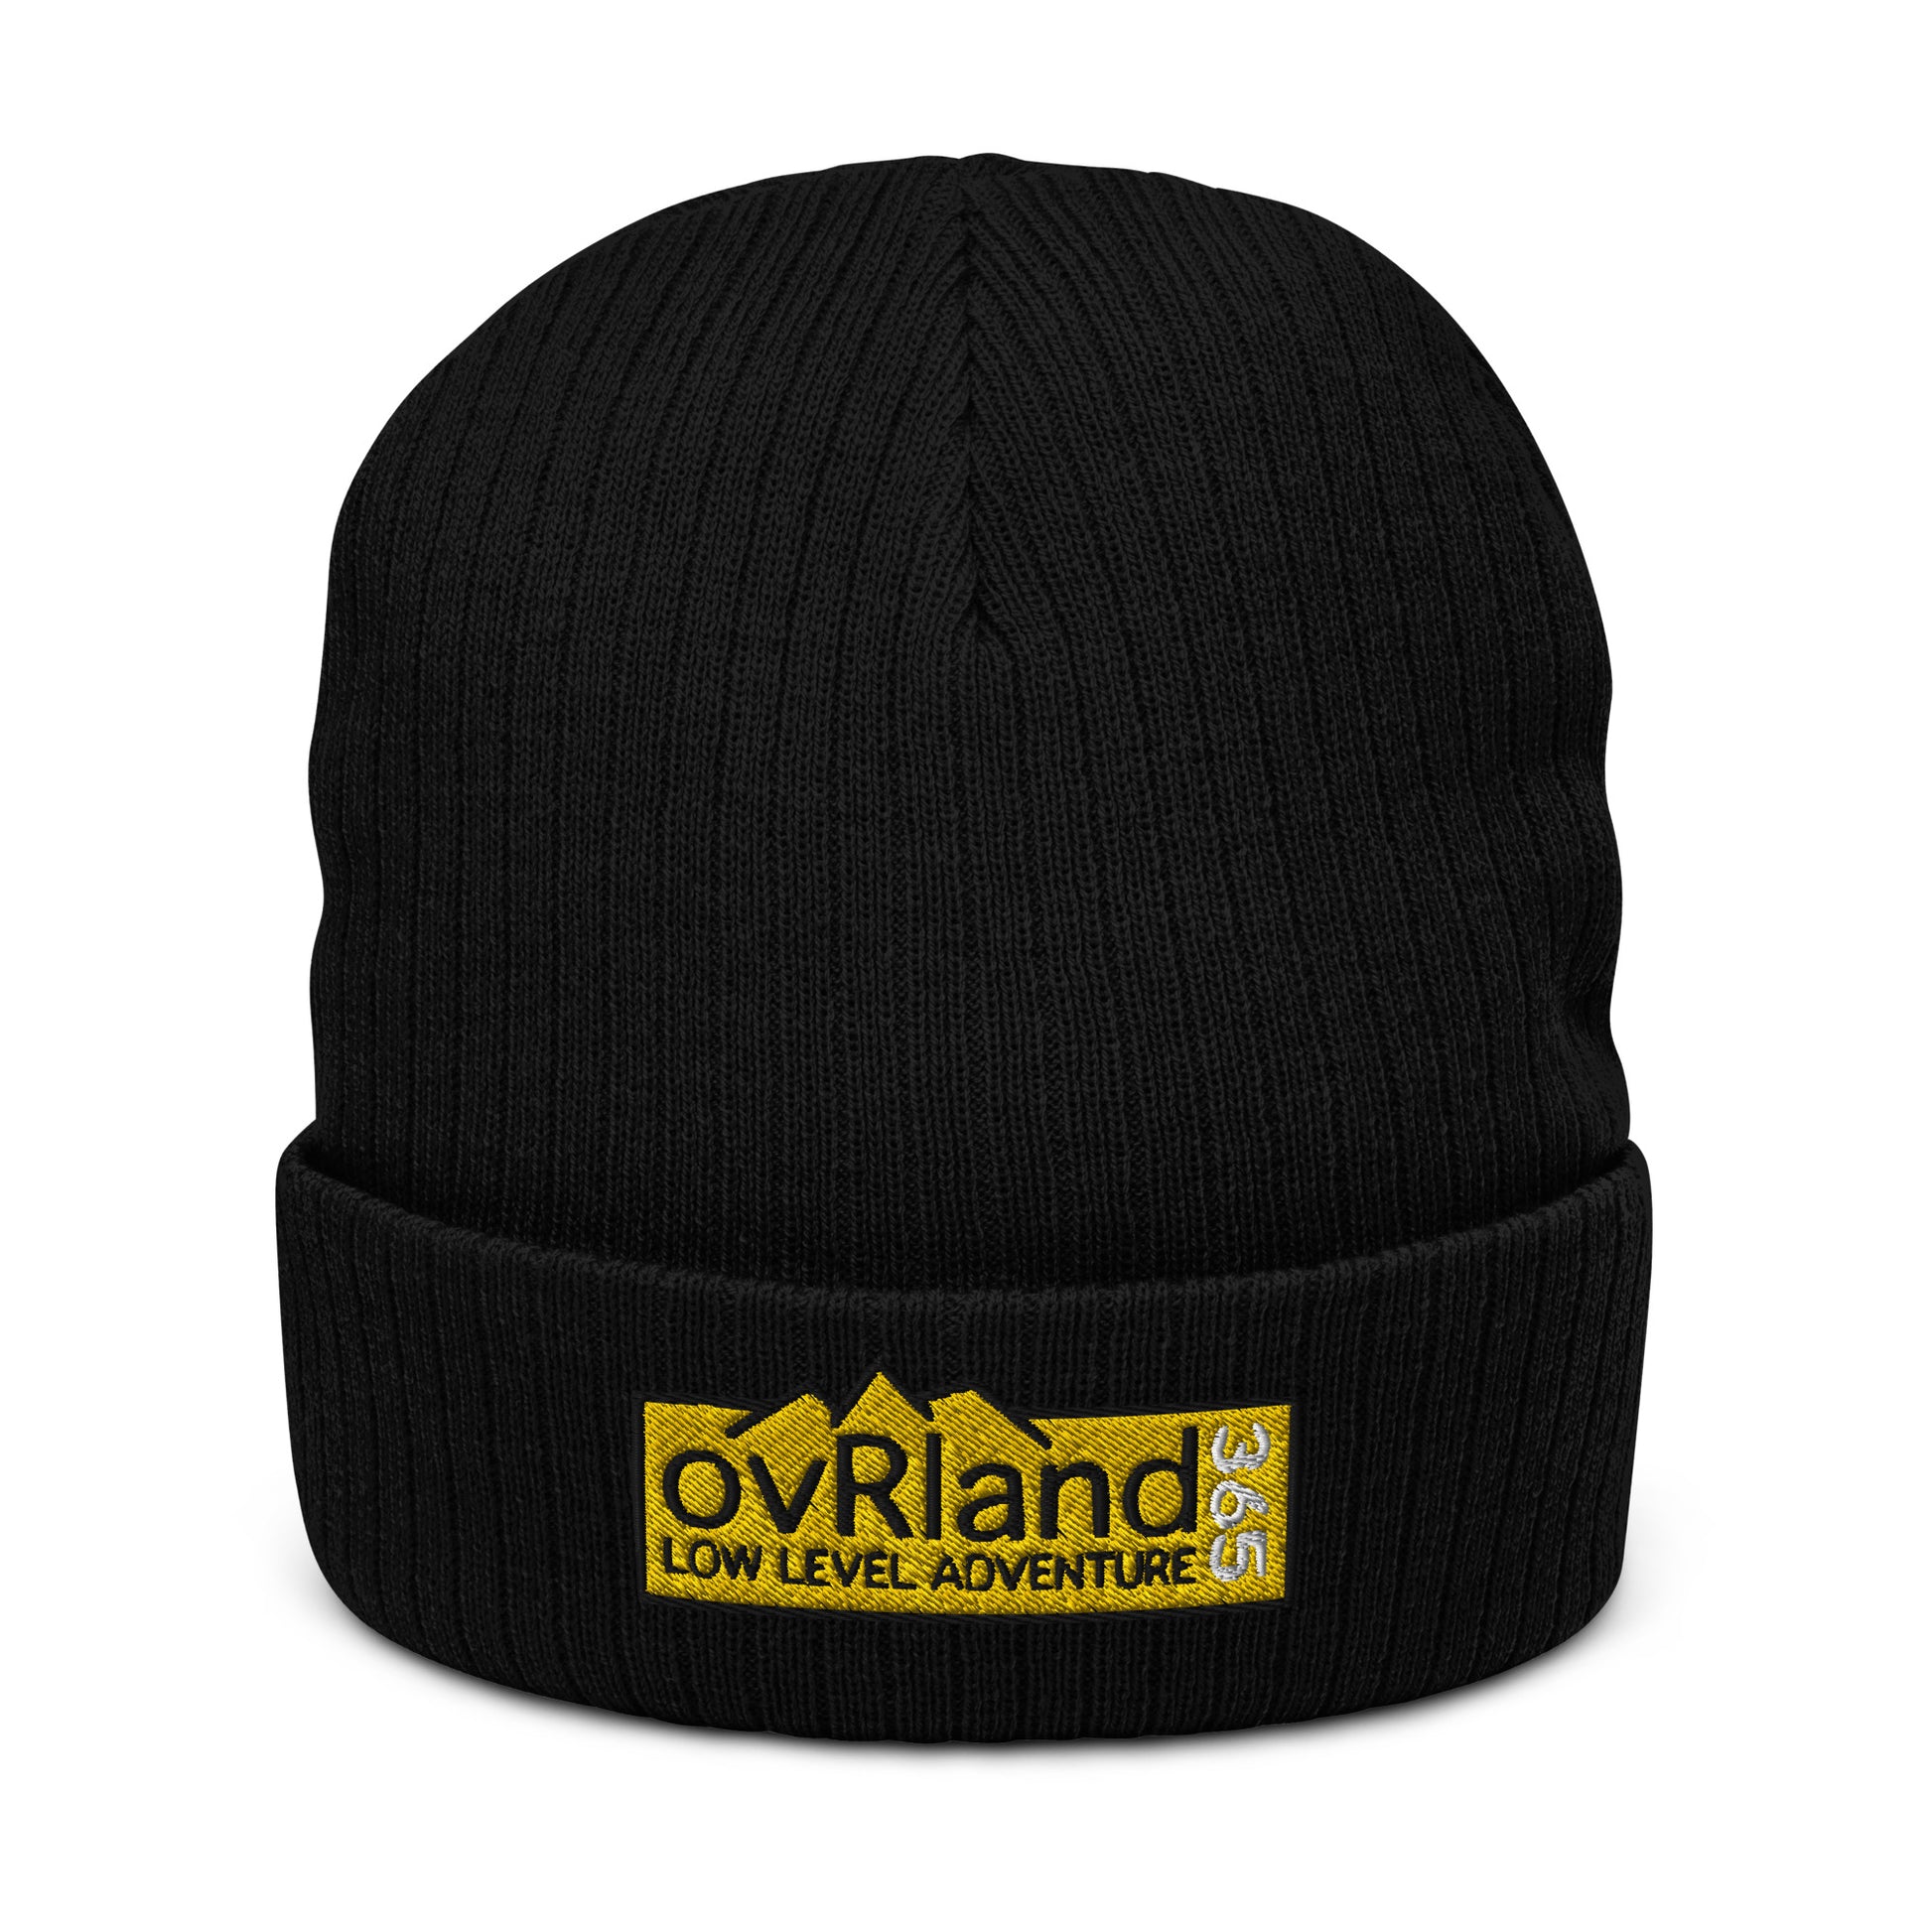 ovRland365 Low Level Adventure overlanding beanie. black. overland365.com